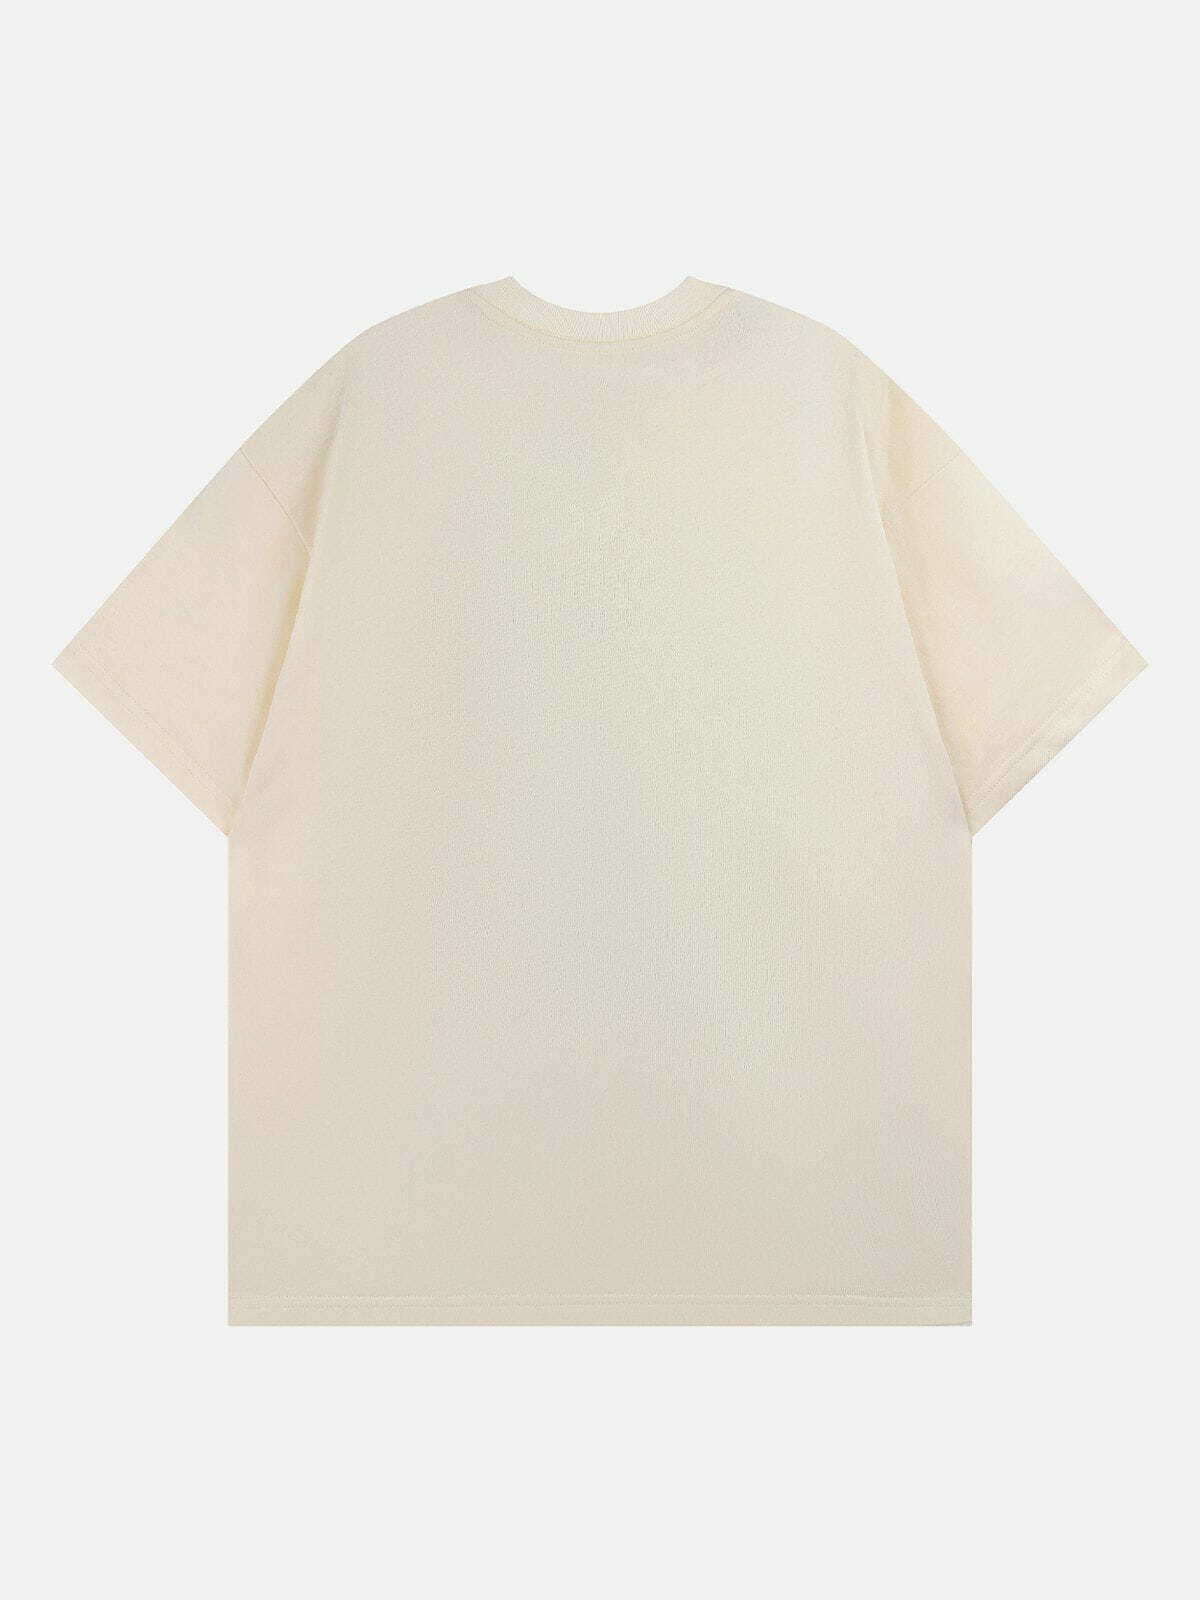 retro cat print tee edgy  vibrant streetwear shirt 5174